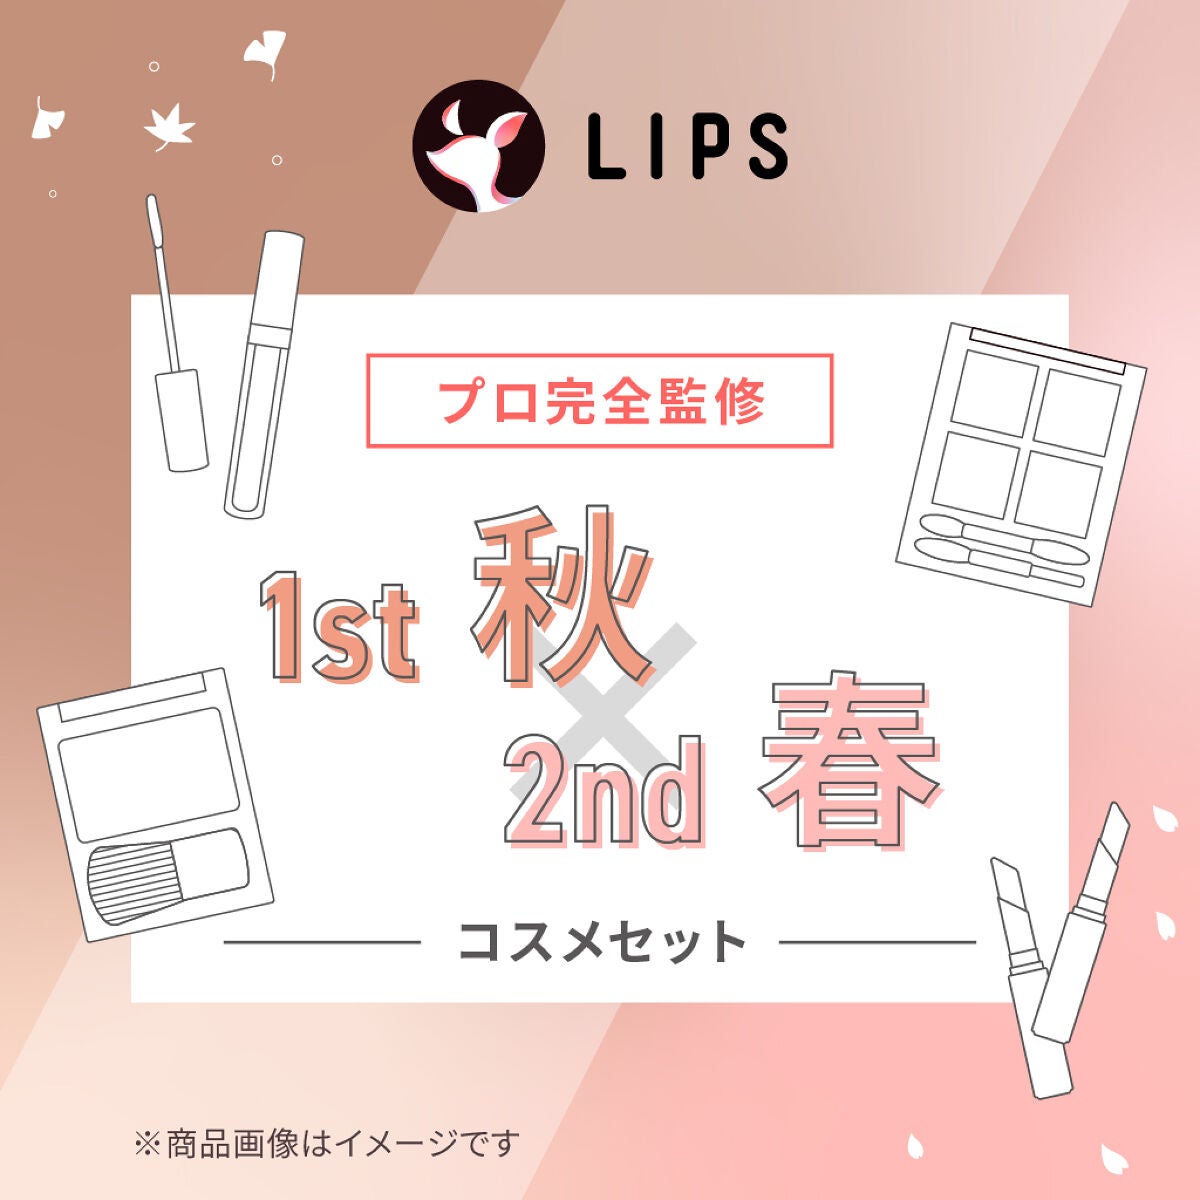 PCセット】1st秋 - 2nd春セット / LIPS